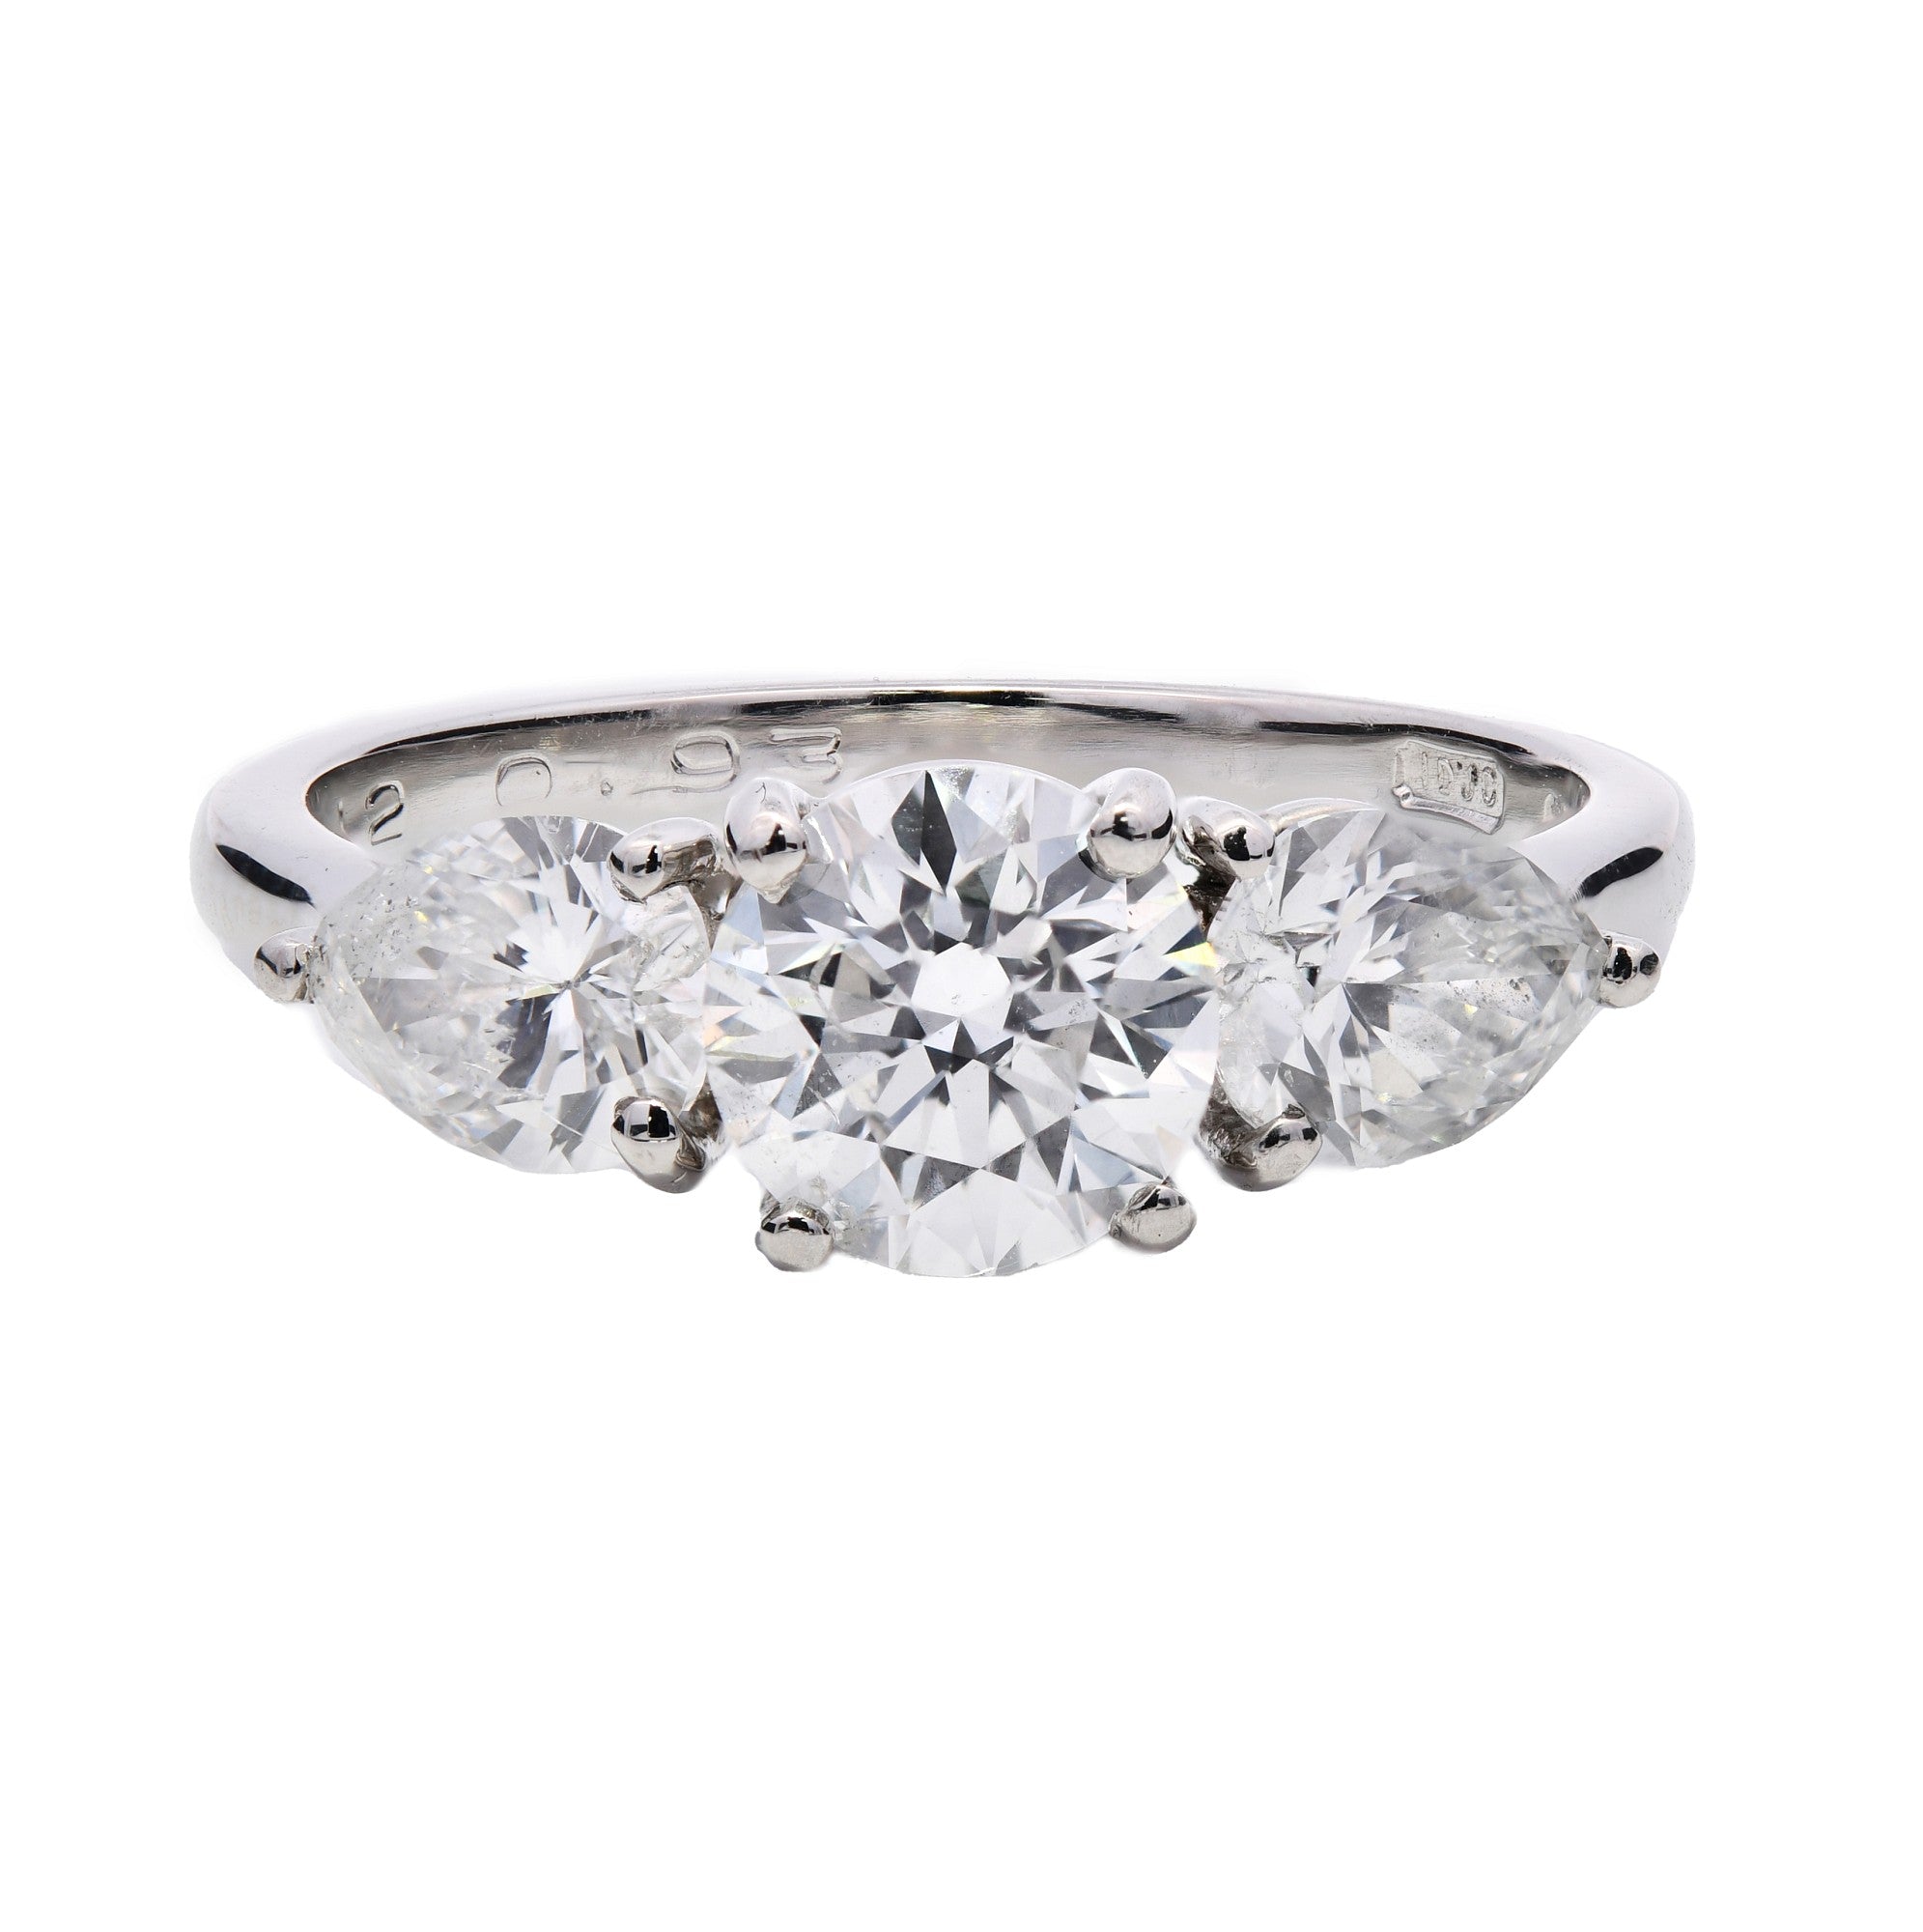 1.94ct round brilliant cut diamond trilogy engagement ring, platinum, E colour, SI2 clarity, GIA certified